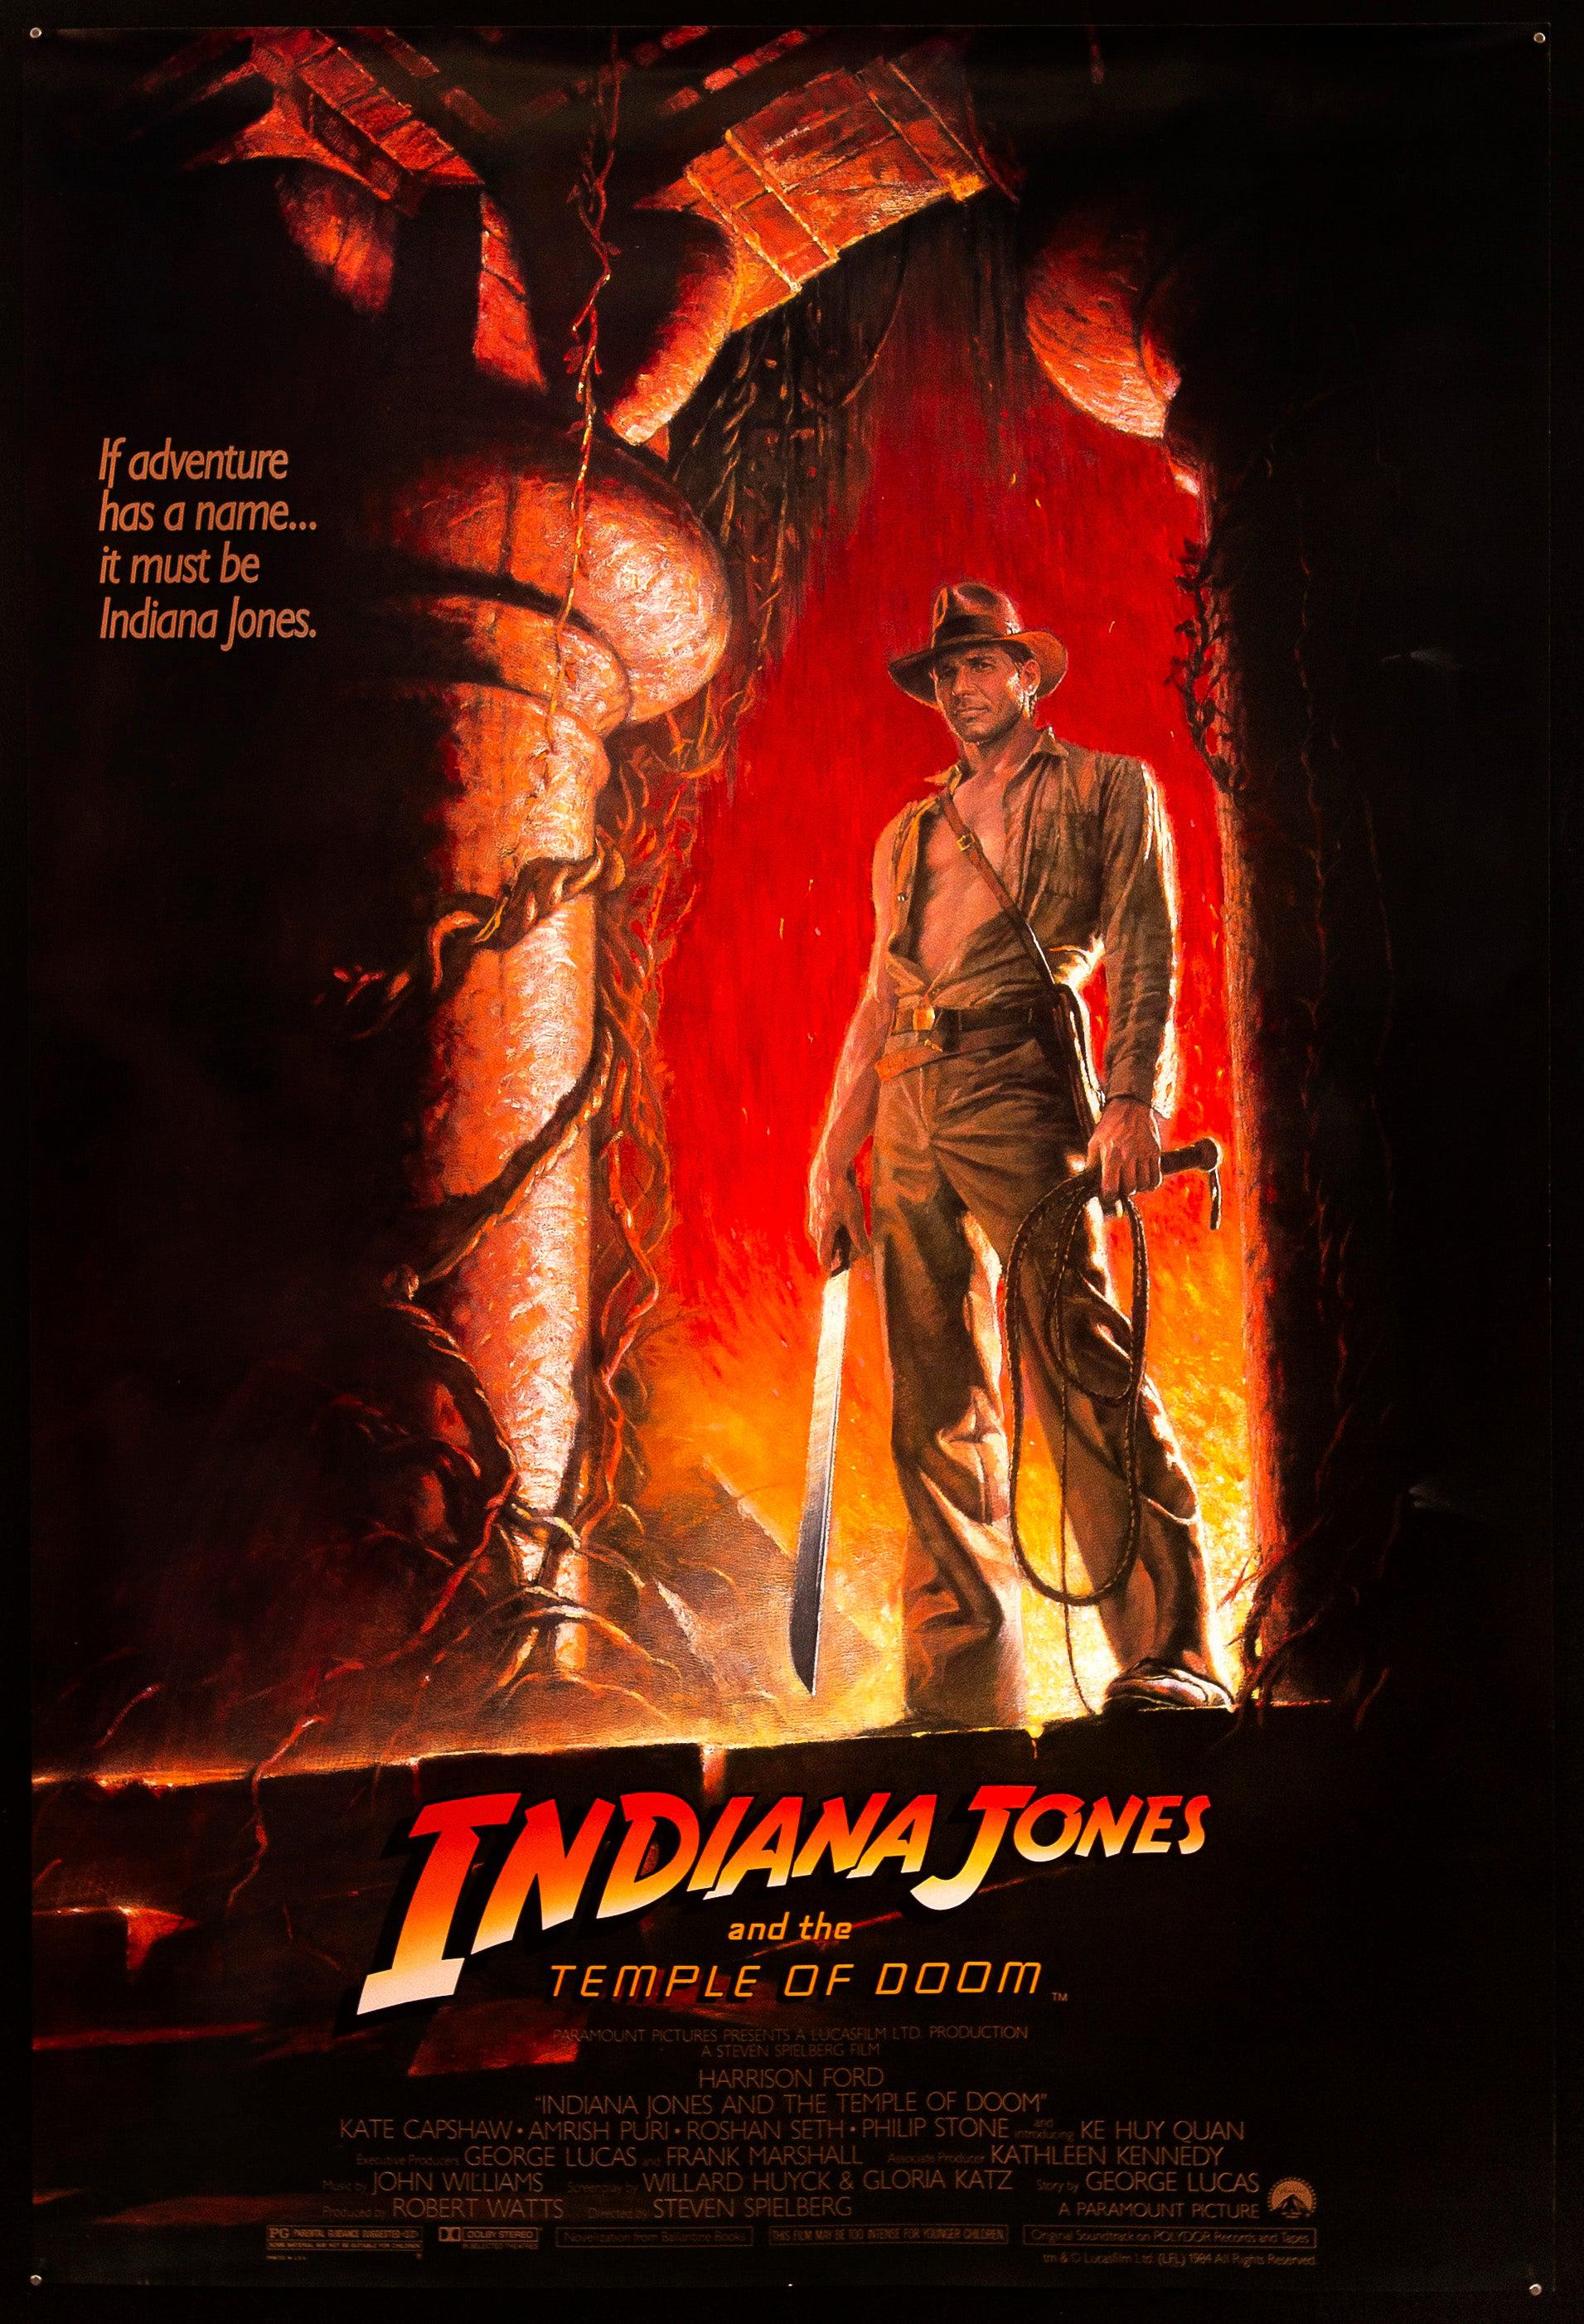 Indiana-Jones-and-the-Temple-of-Doom-Film-Poster.jpg